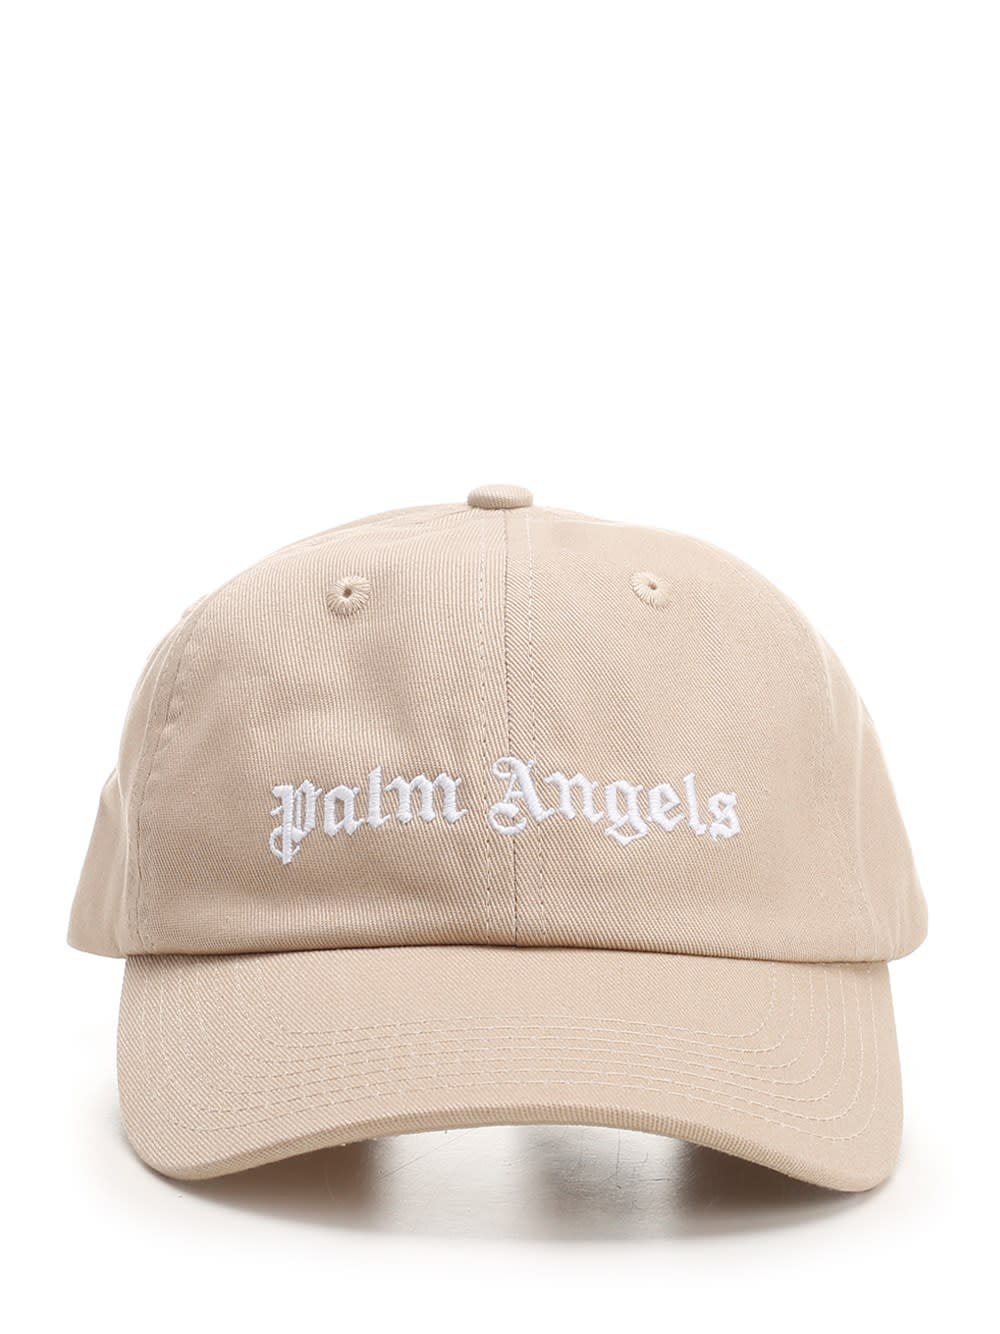 PALM ANGELS BEIGE BASEBALL CAP WITH LOGO